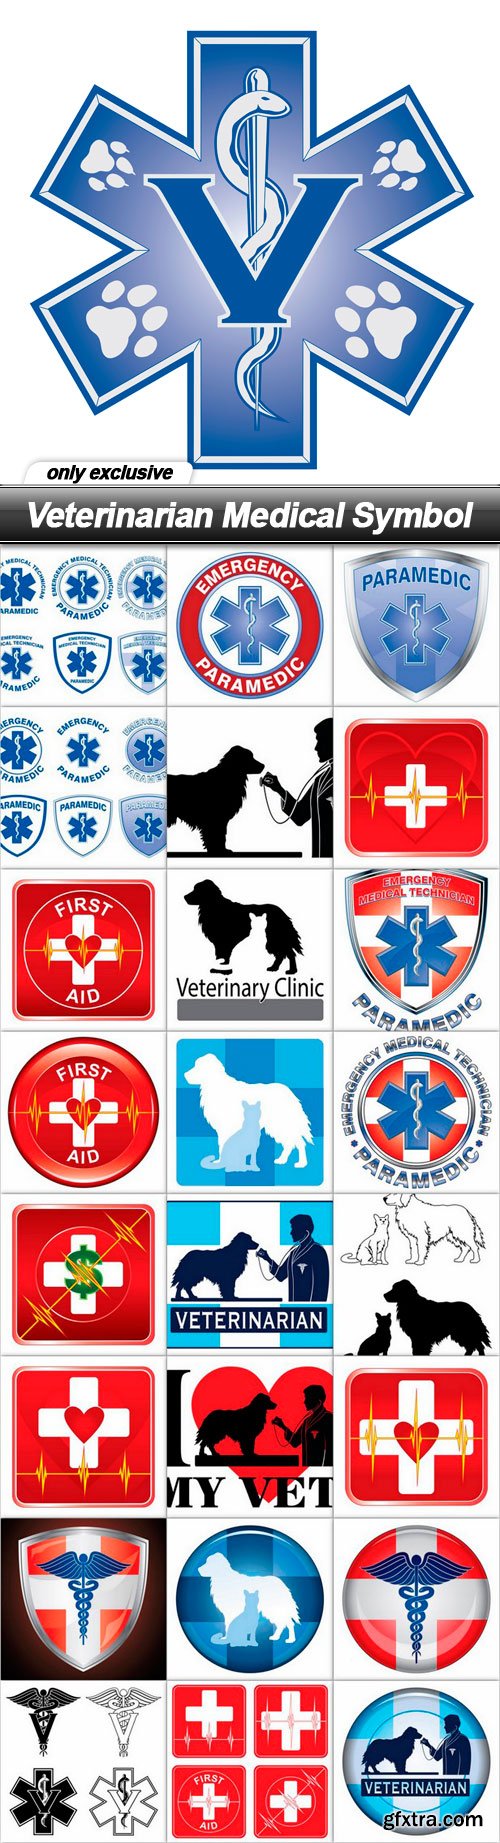 Veterinarian Medical Symbol - 25 EPS